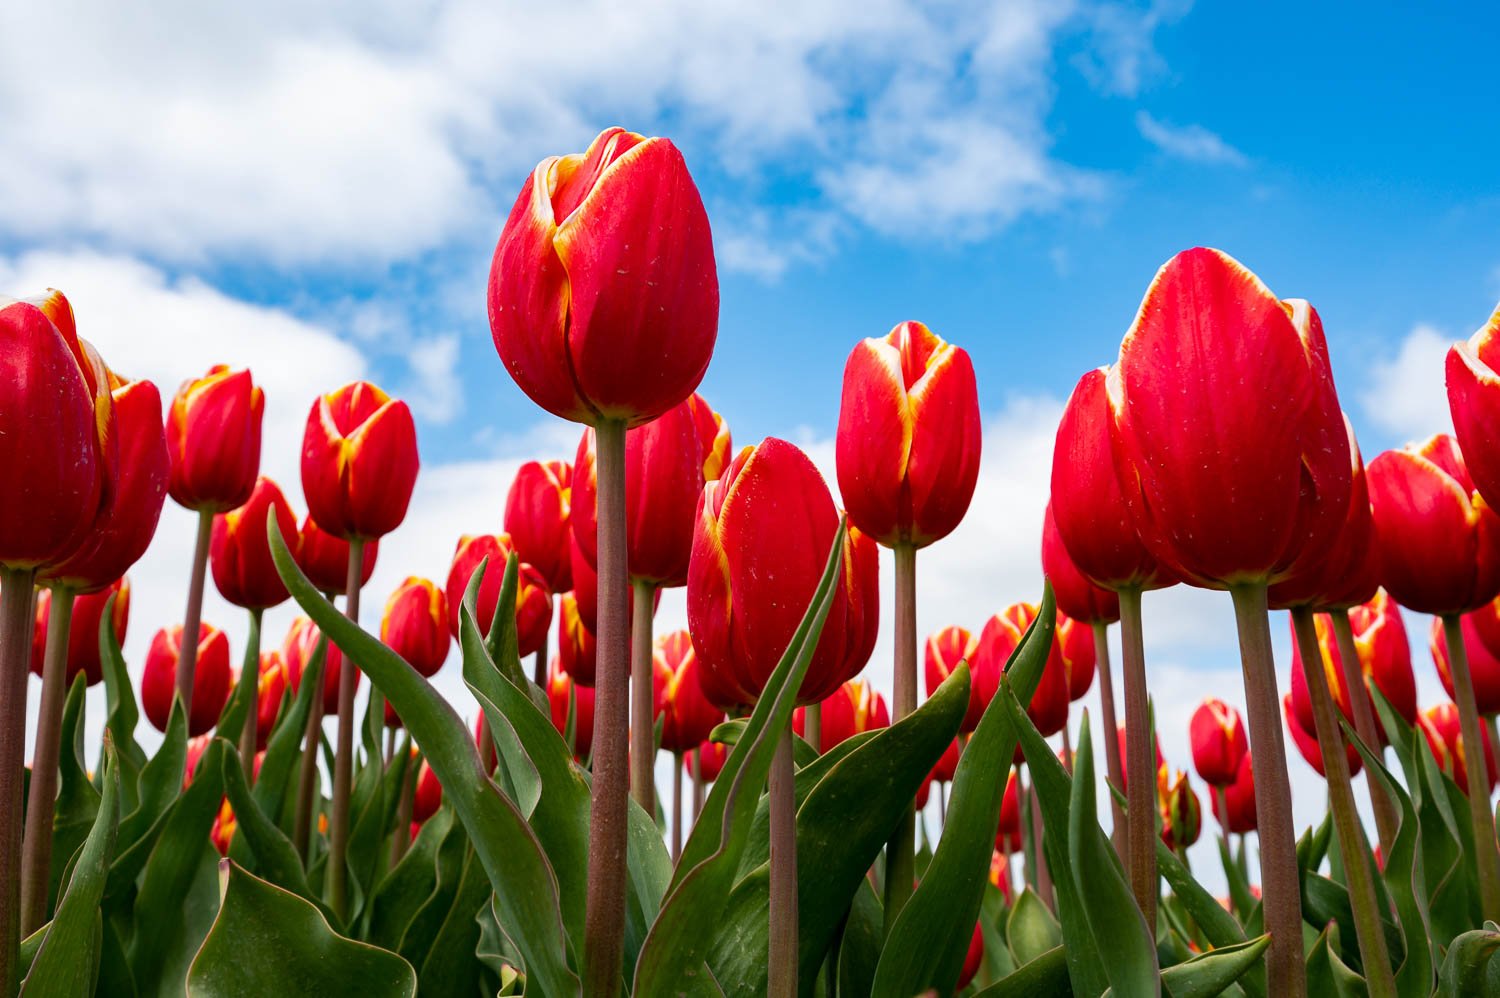 Tulip bulbs production industry, red tulip flowers fields in blo